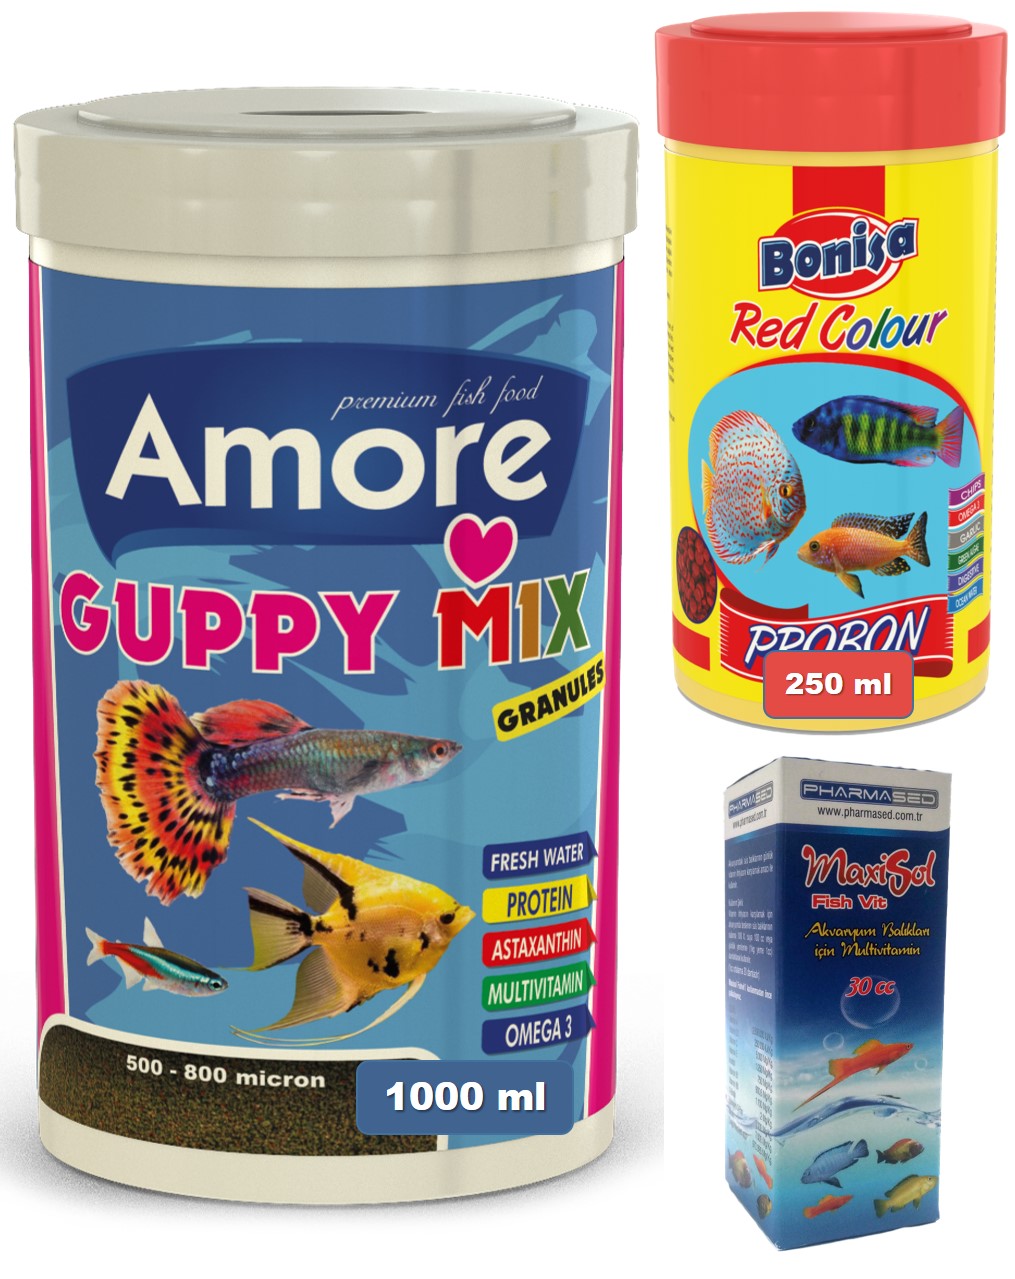 Amore Guppy Mix Granules 1 Lt Ve Bonisa Red Colour Tropikal Renklendirme Yemi 250 Ml Ve Vitamin